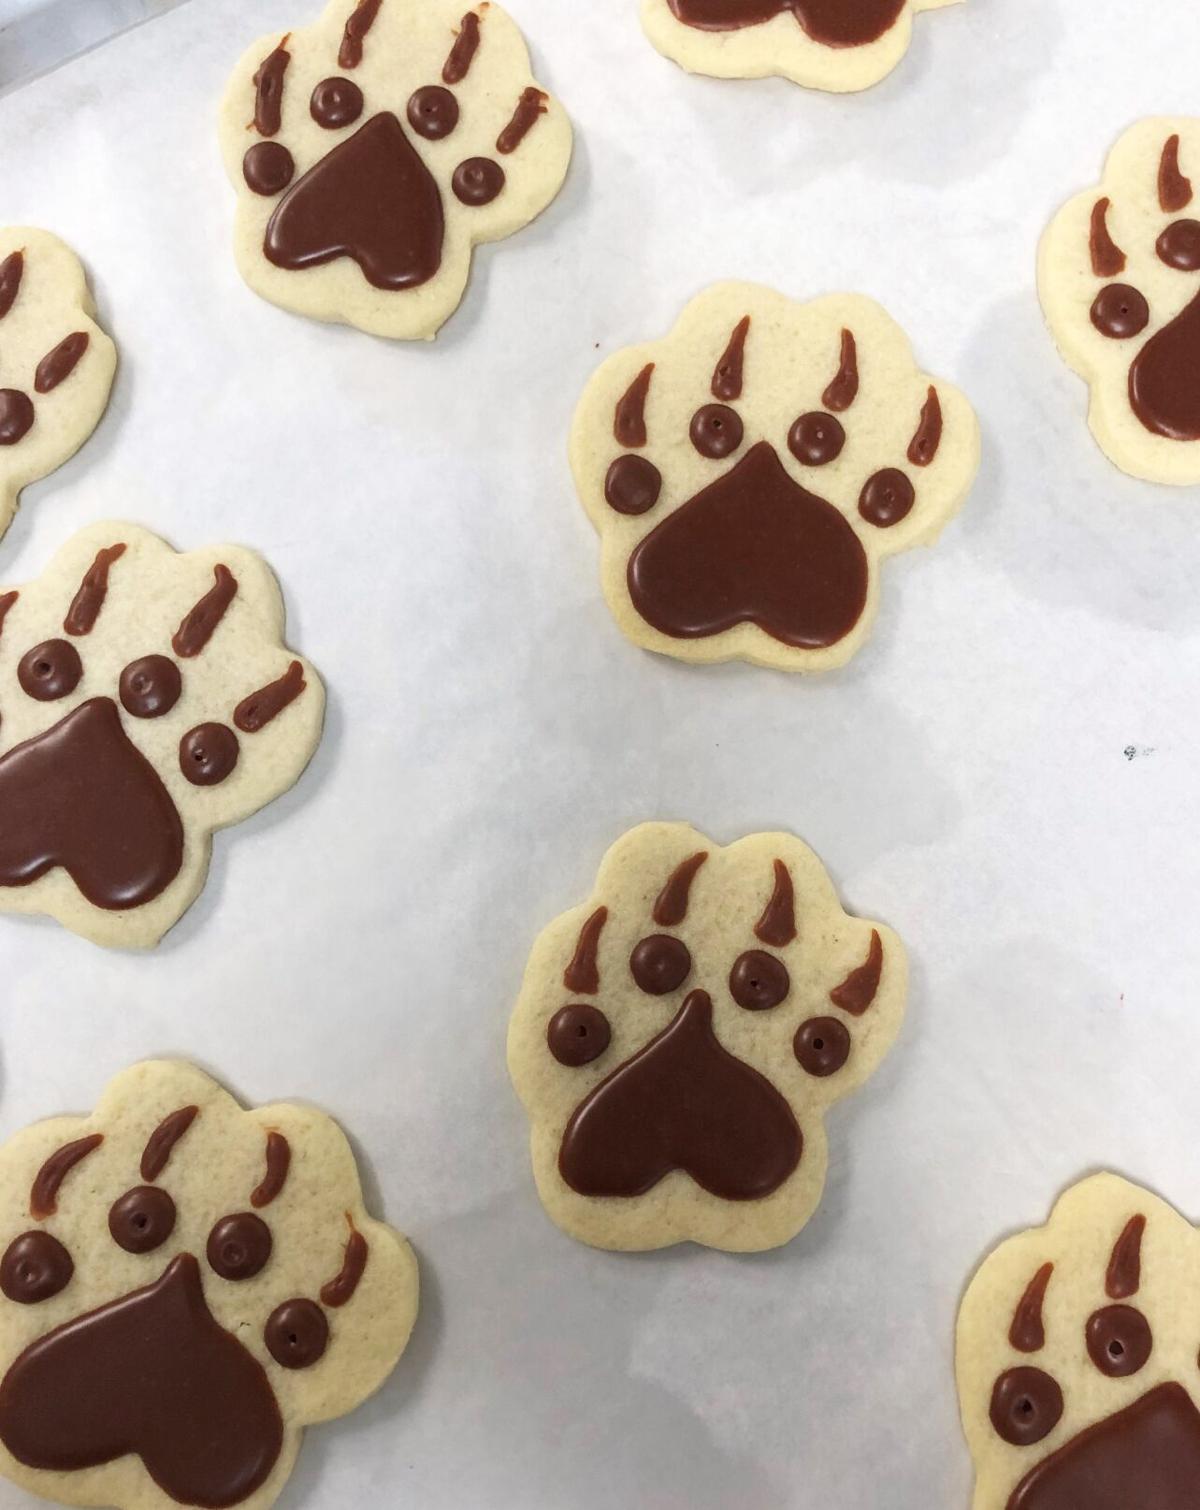 Marsha Kisner, owner of Baker's Nook in Farmington, makes cookies for Huskies fans.